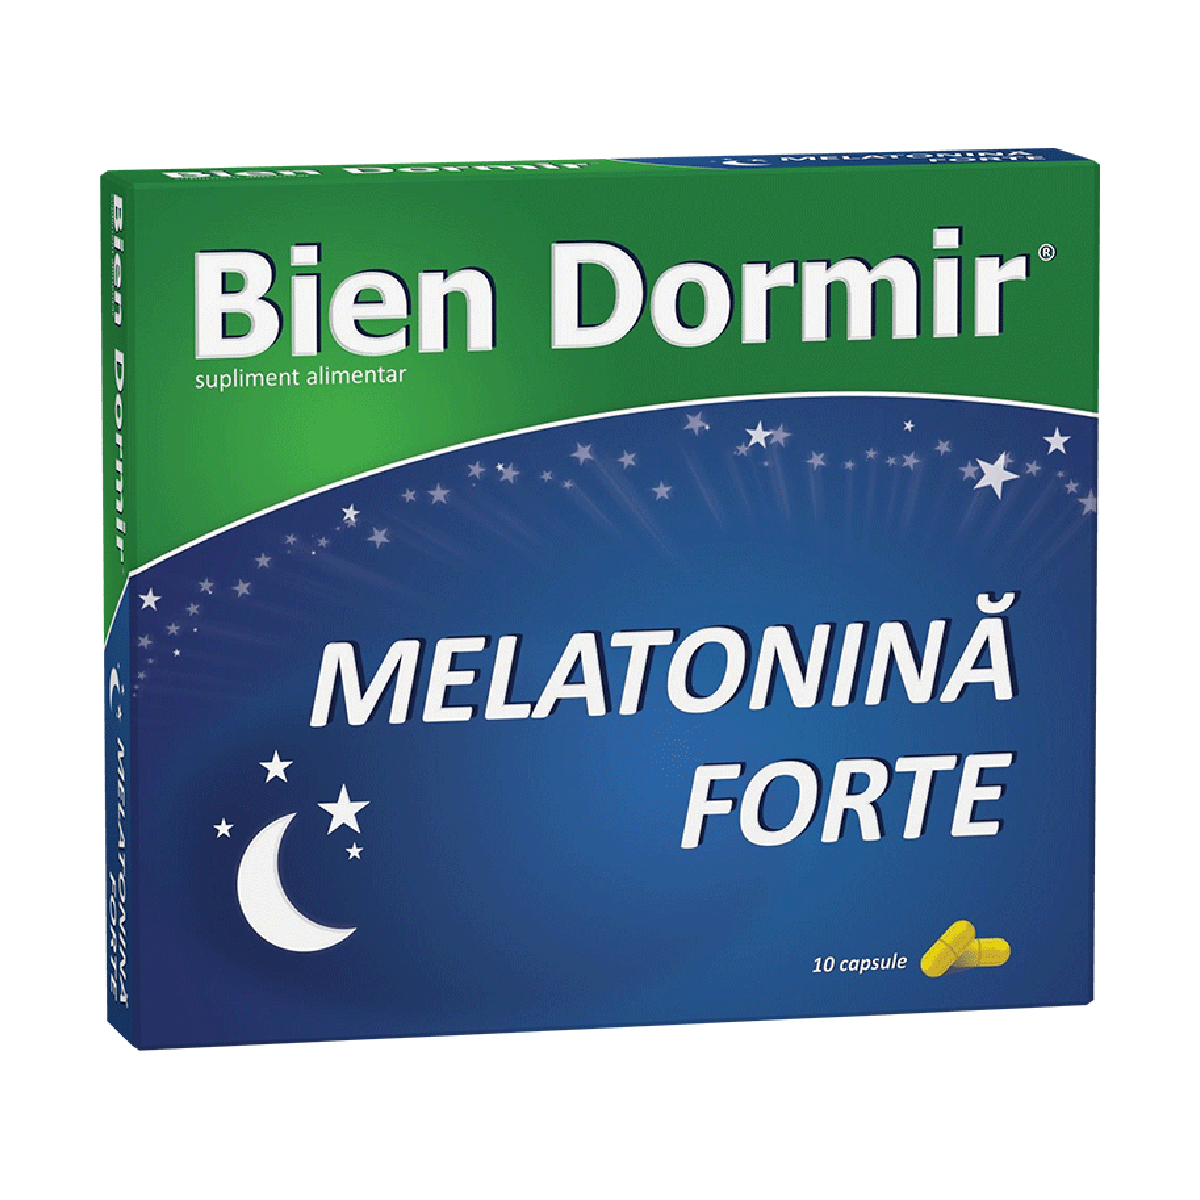 Bien Dormir + Melatonina forte, 10 capsule Bien